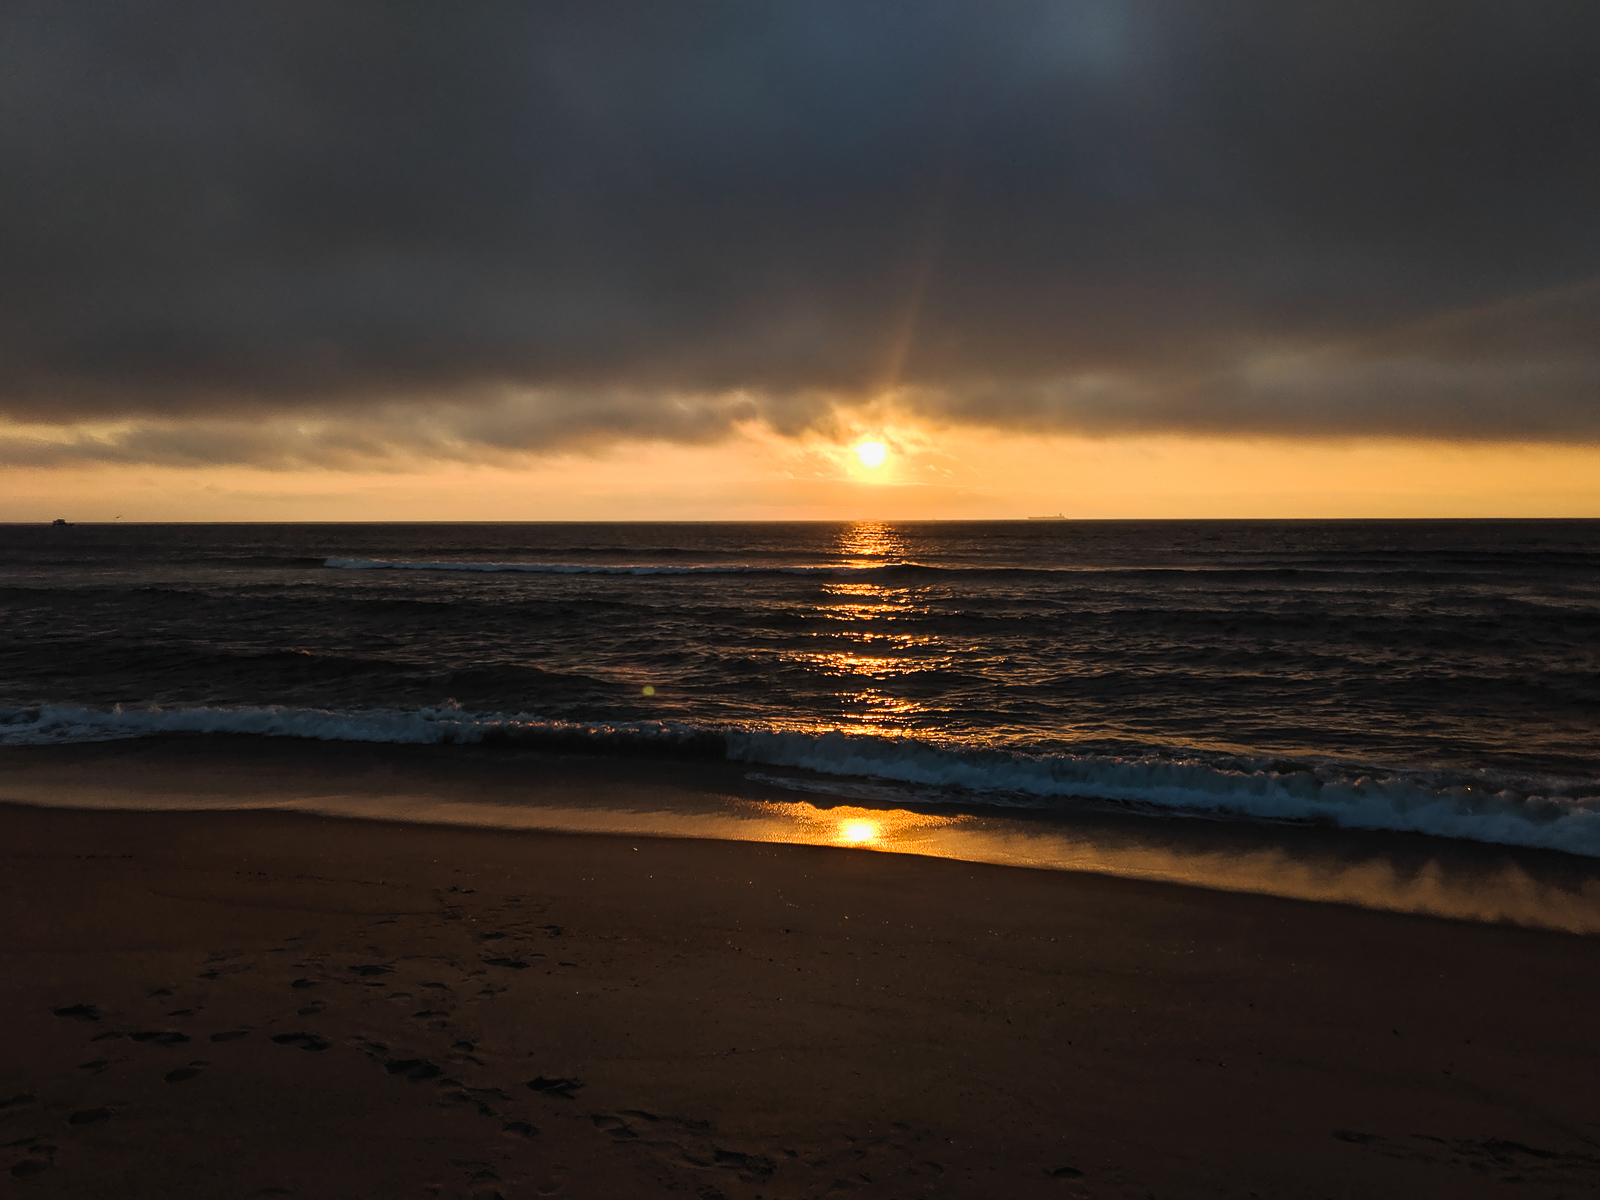 Sunrise over the ocean at Sandy Hook